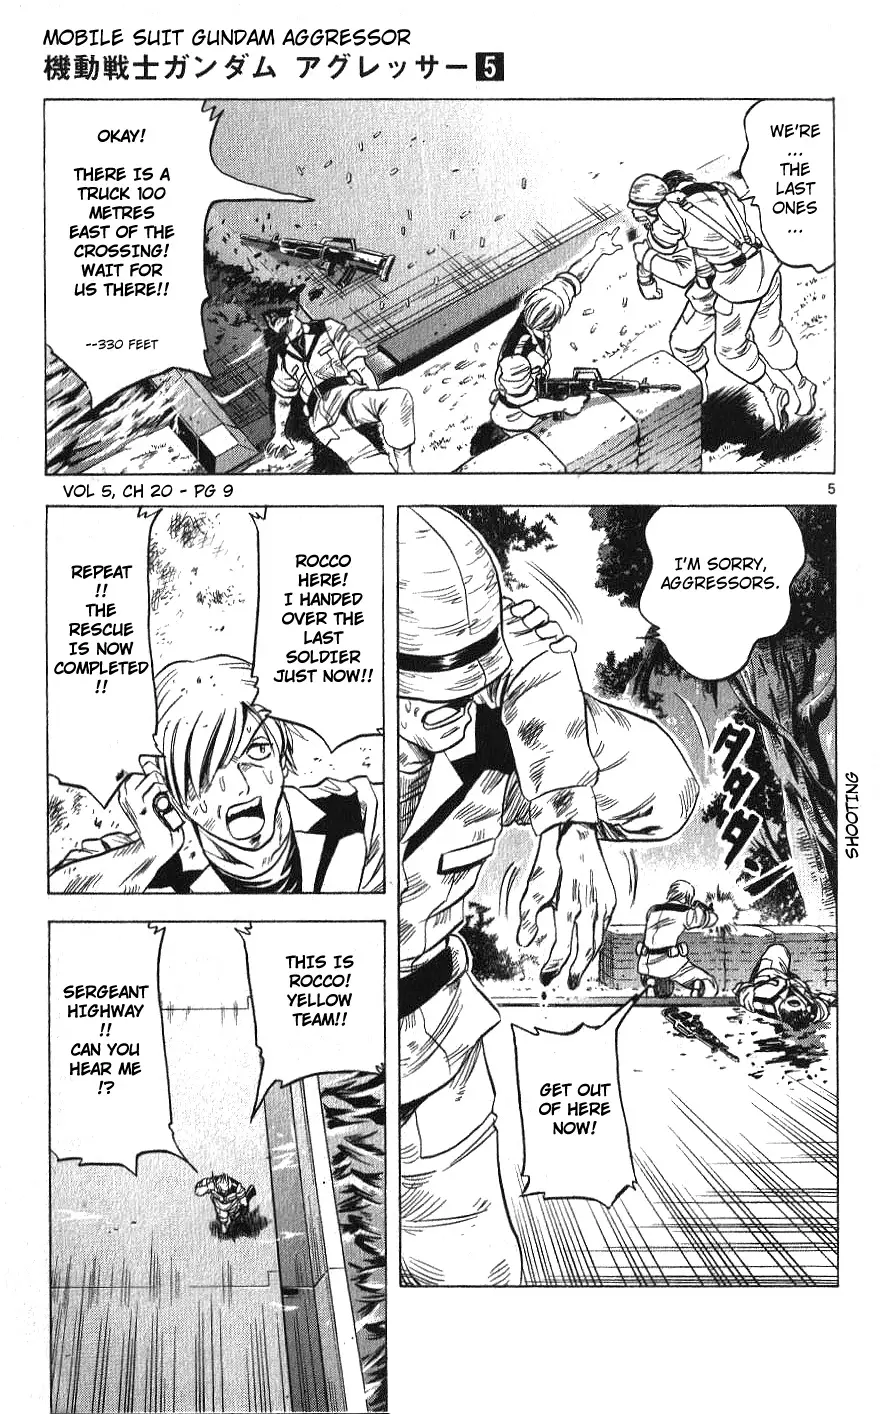 Mobile Suit Gundam Aggressor - 20 page 6-7b804396